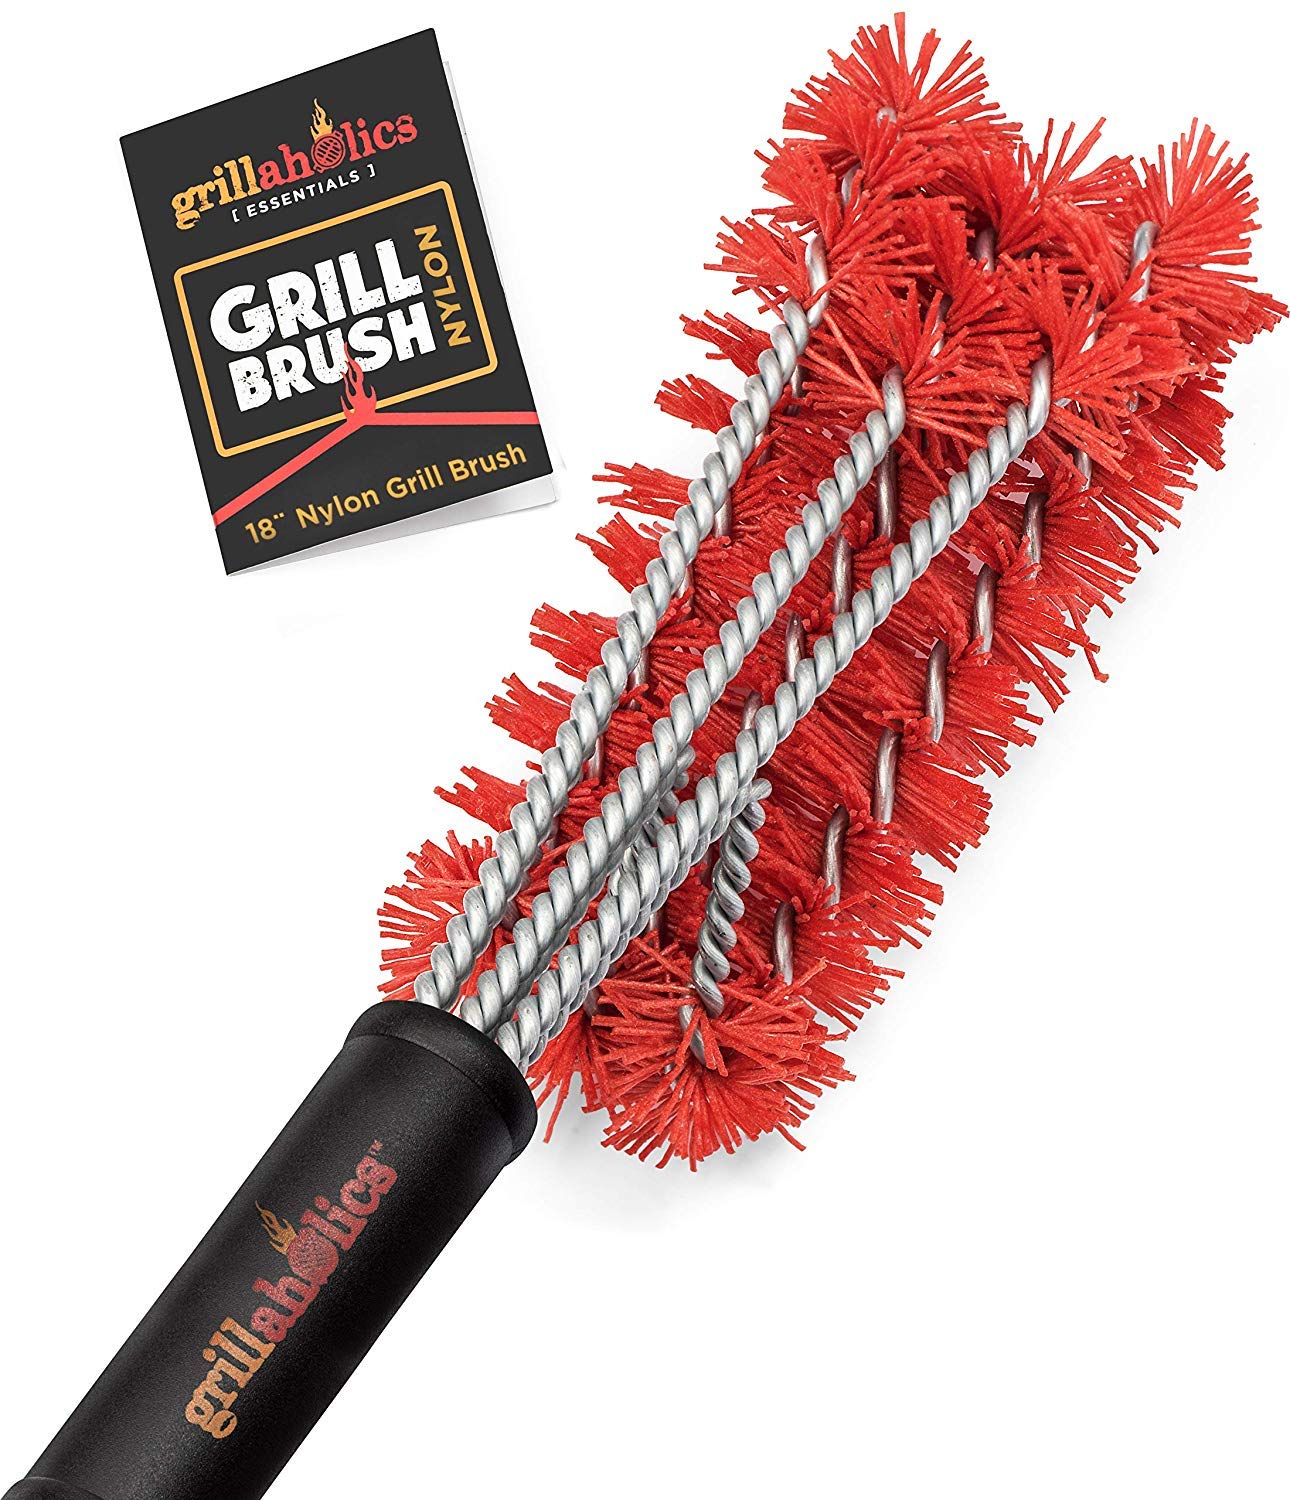 Grillaholics Essentials Nylon Grill Brush